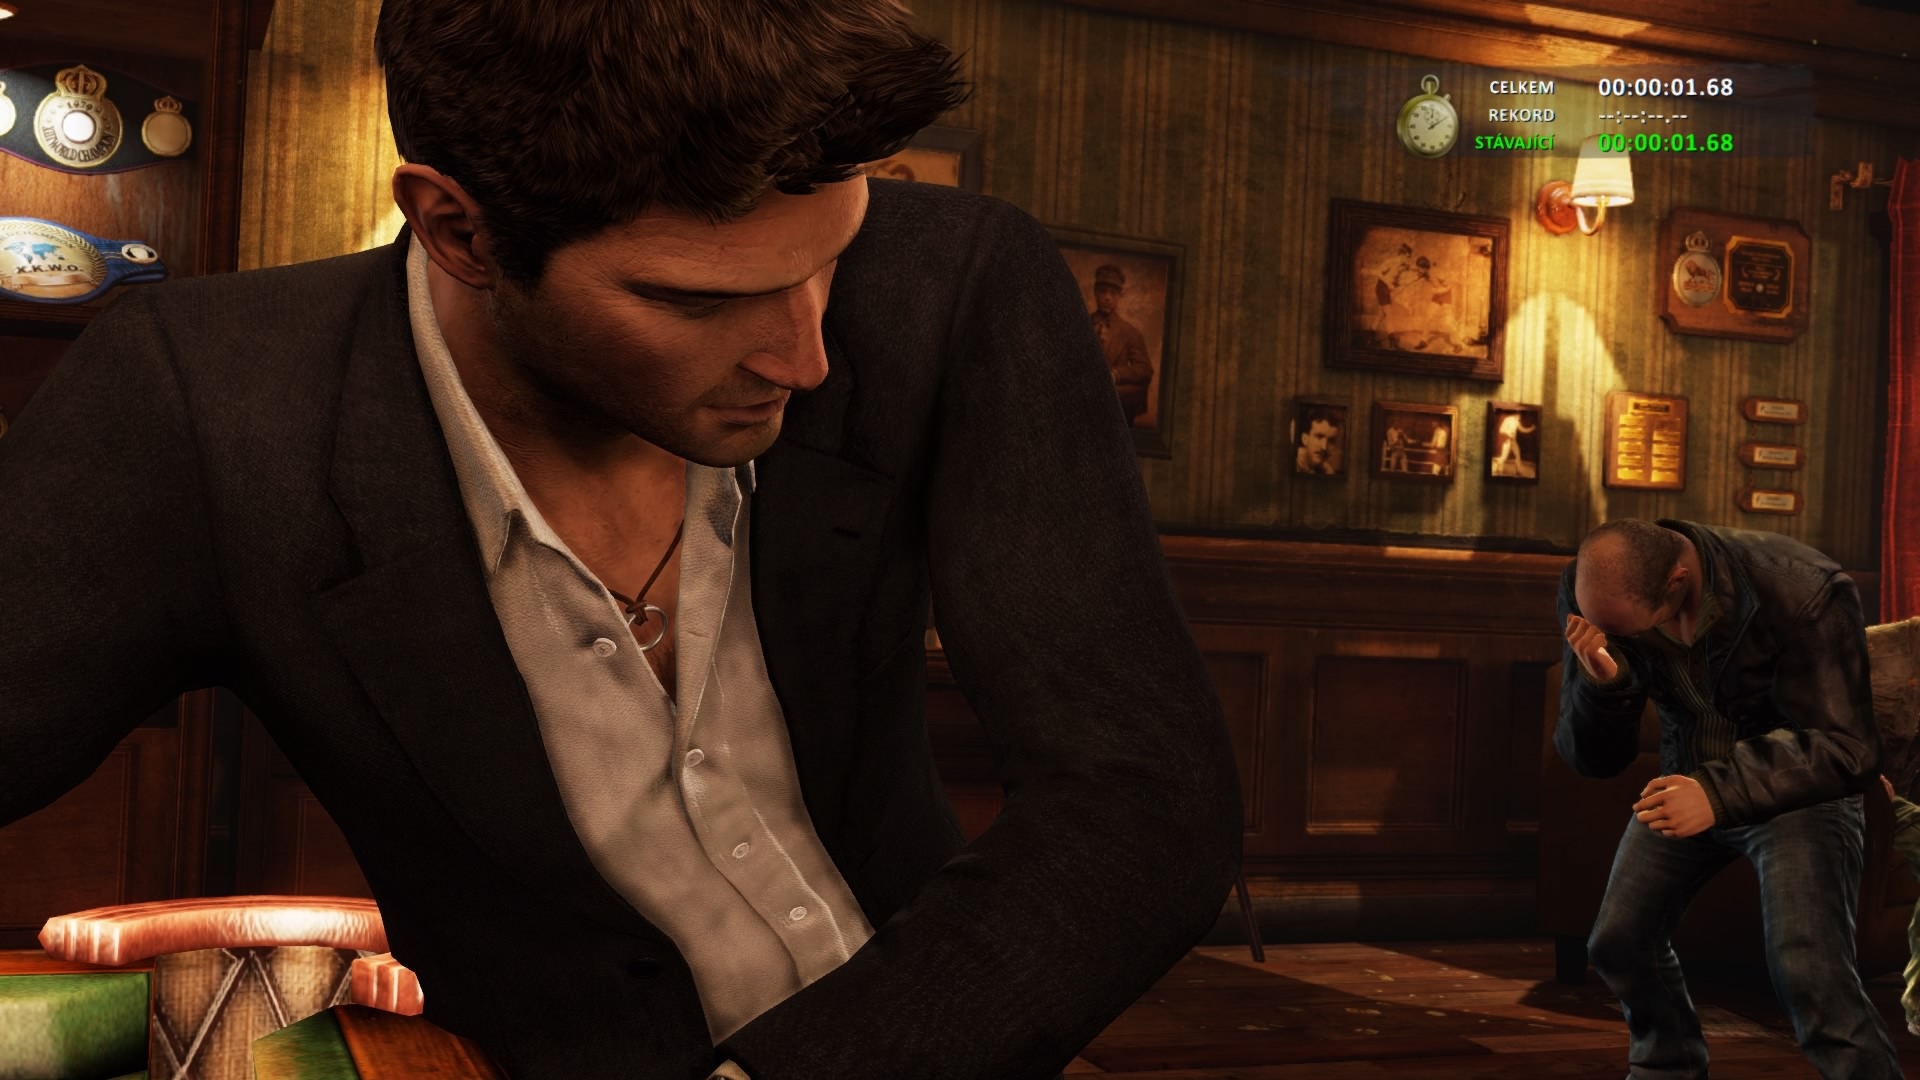 Uncharted: The Nathan Drake Collection Dokete hrou prejs najrchlejie prve vy?